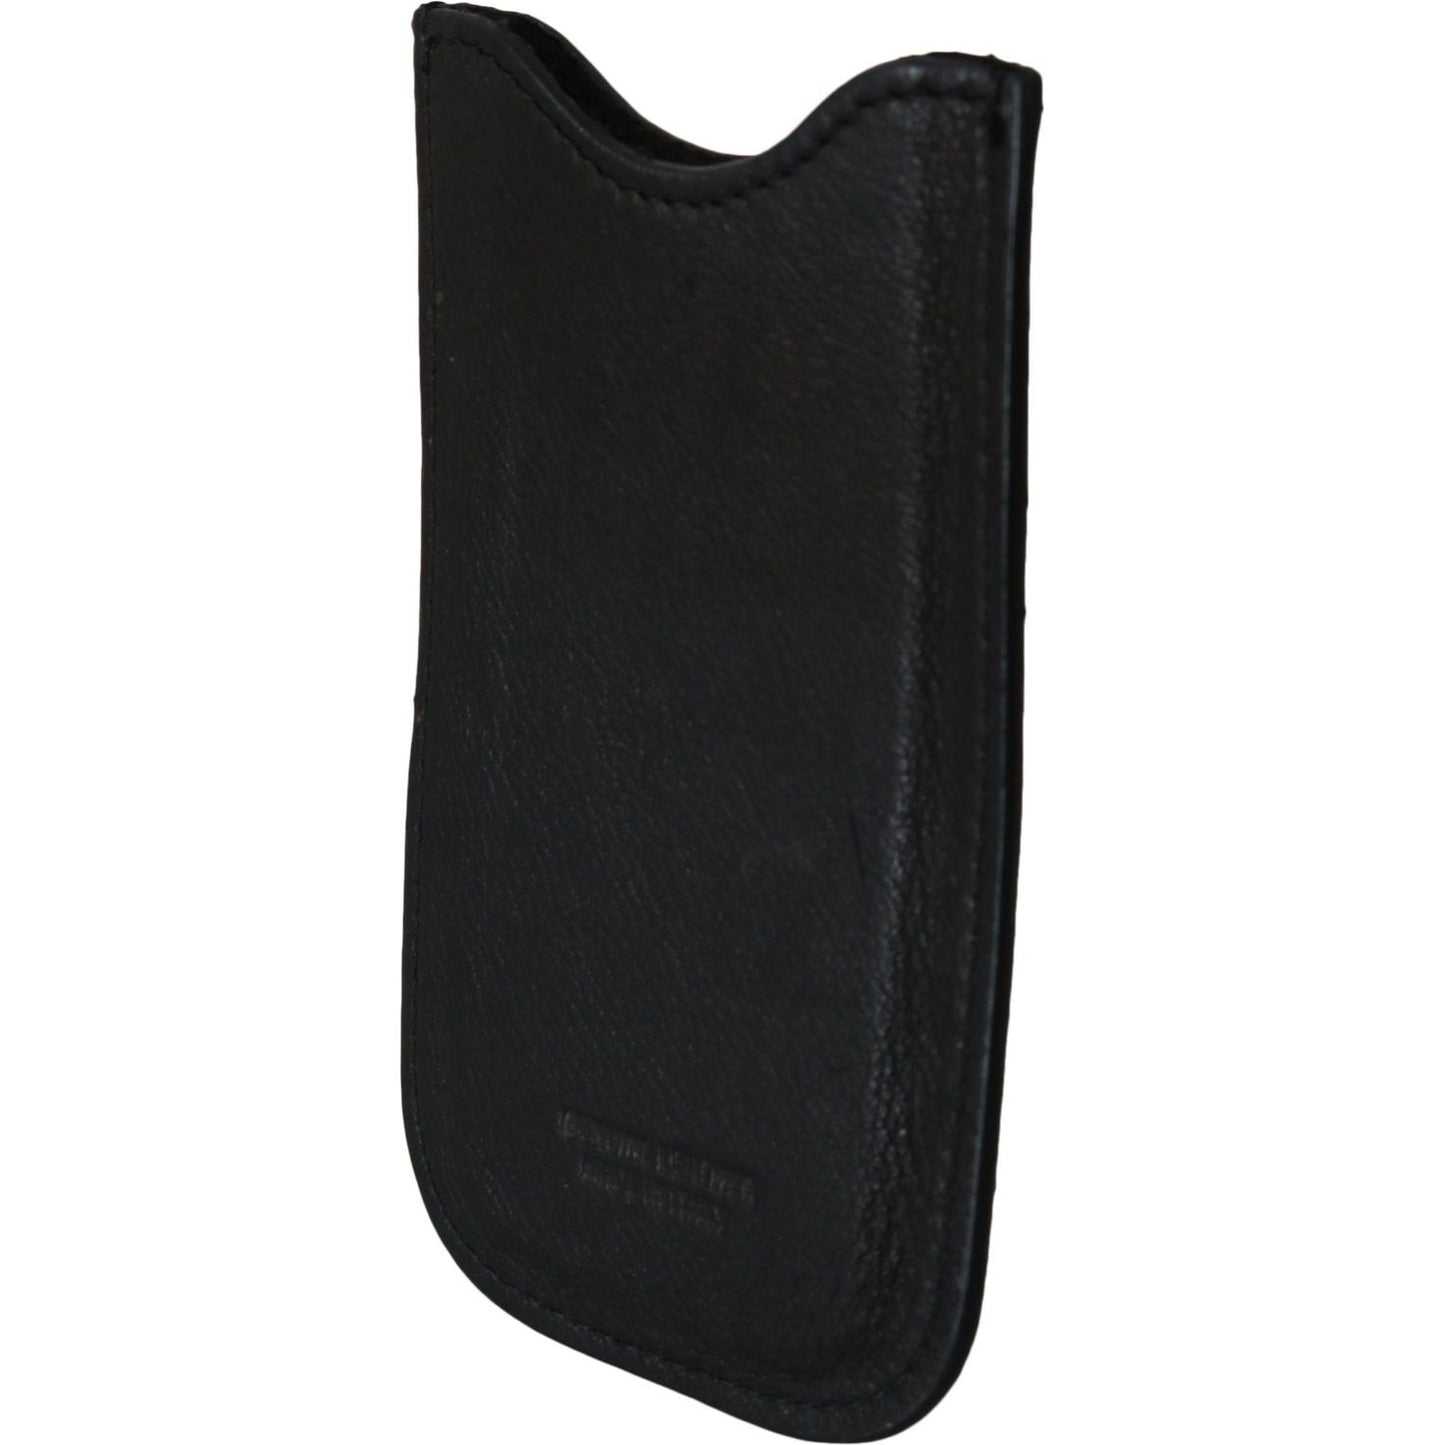 John Galliano Elegant Black Genuine Leather Men's Wallet Wallet black-leather-multifunctional-men-id-bill-card-holder-wallet IMG_1774-scaled-eb1260ef-4e8.jpg